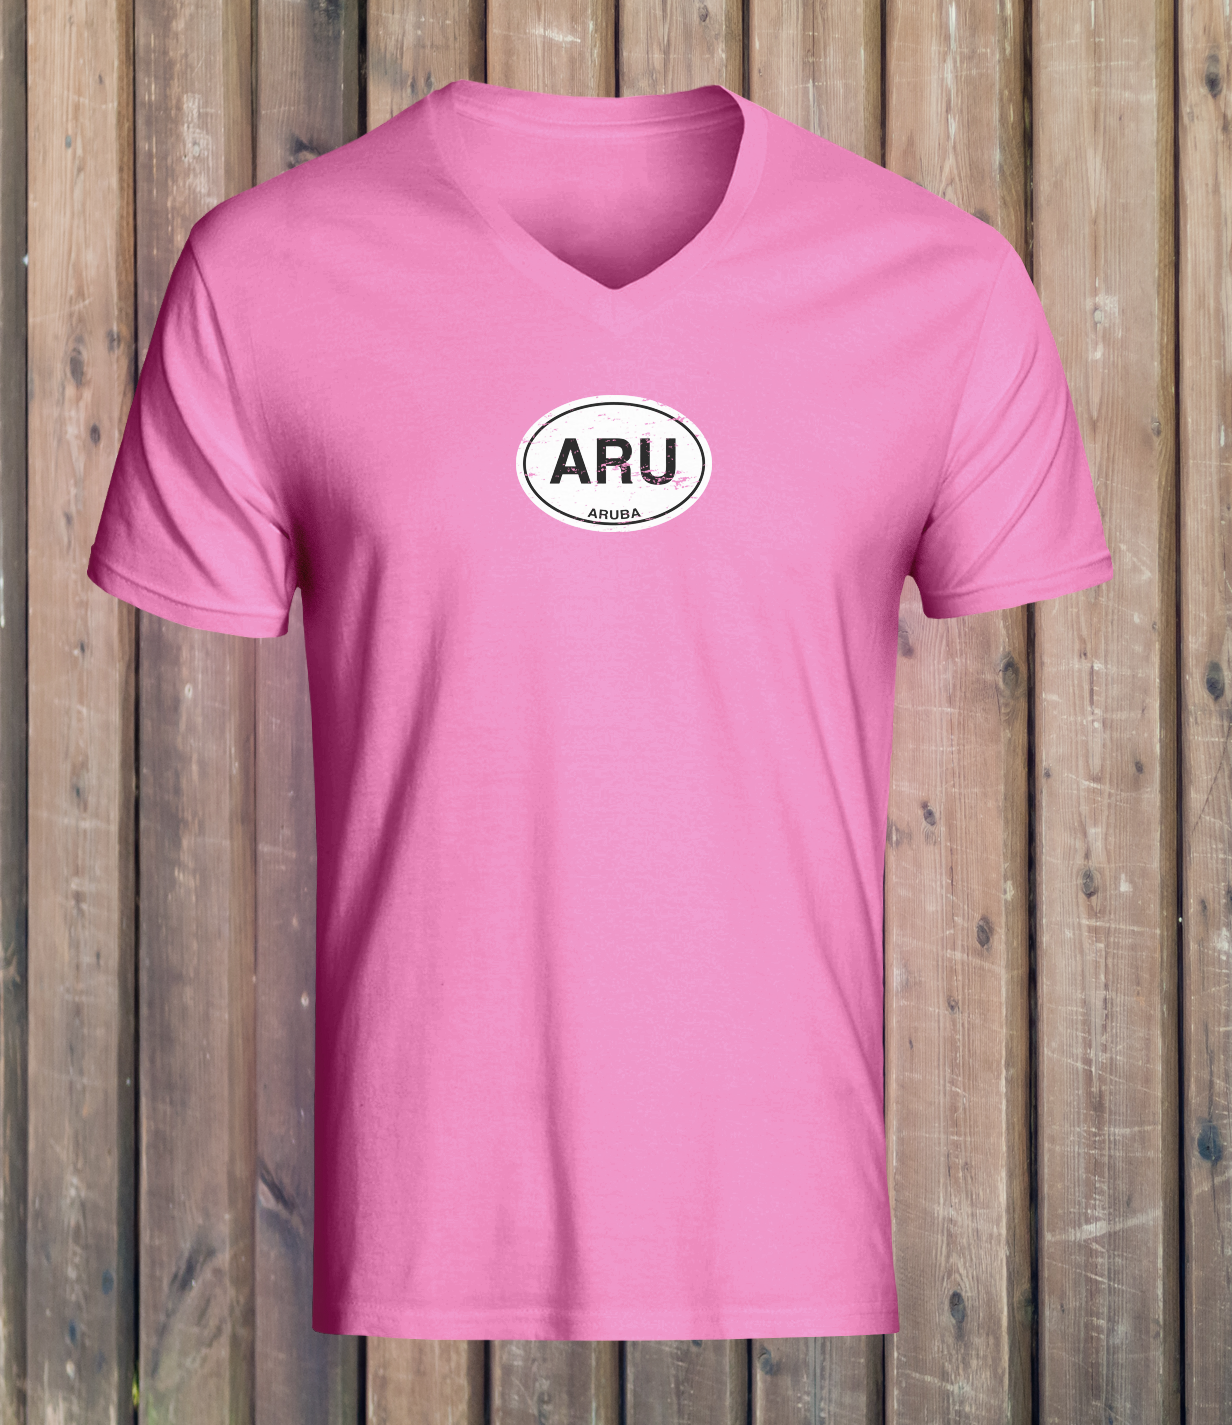 Aruba Women's Classic V-Neck T-Shirts - My Destination Location